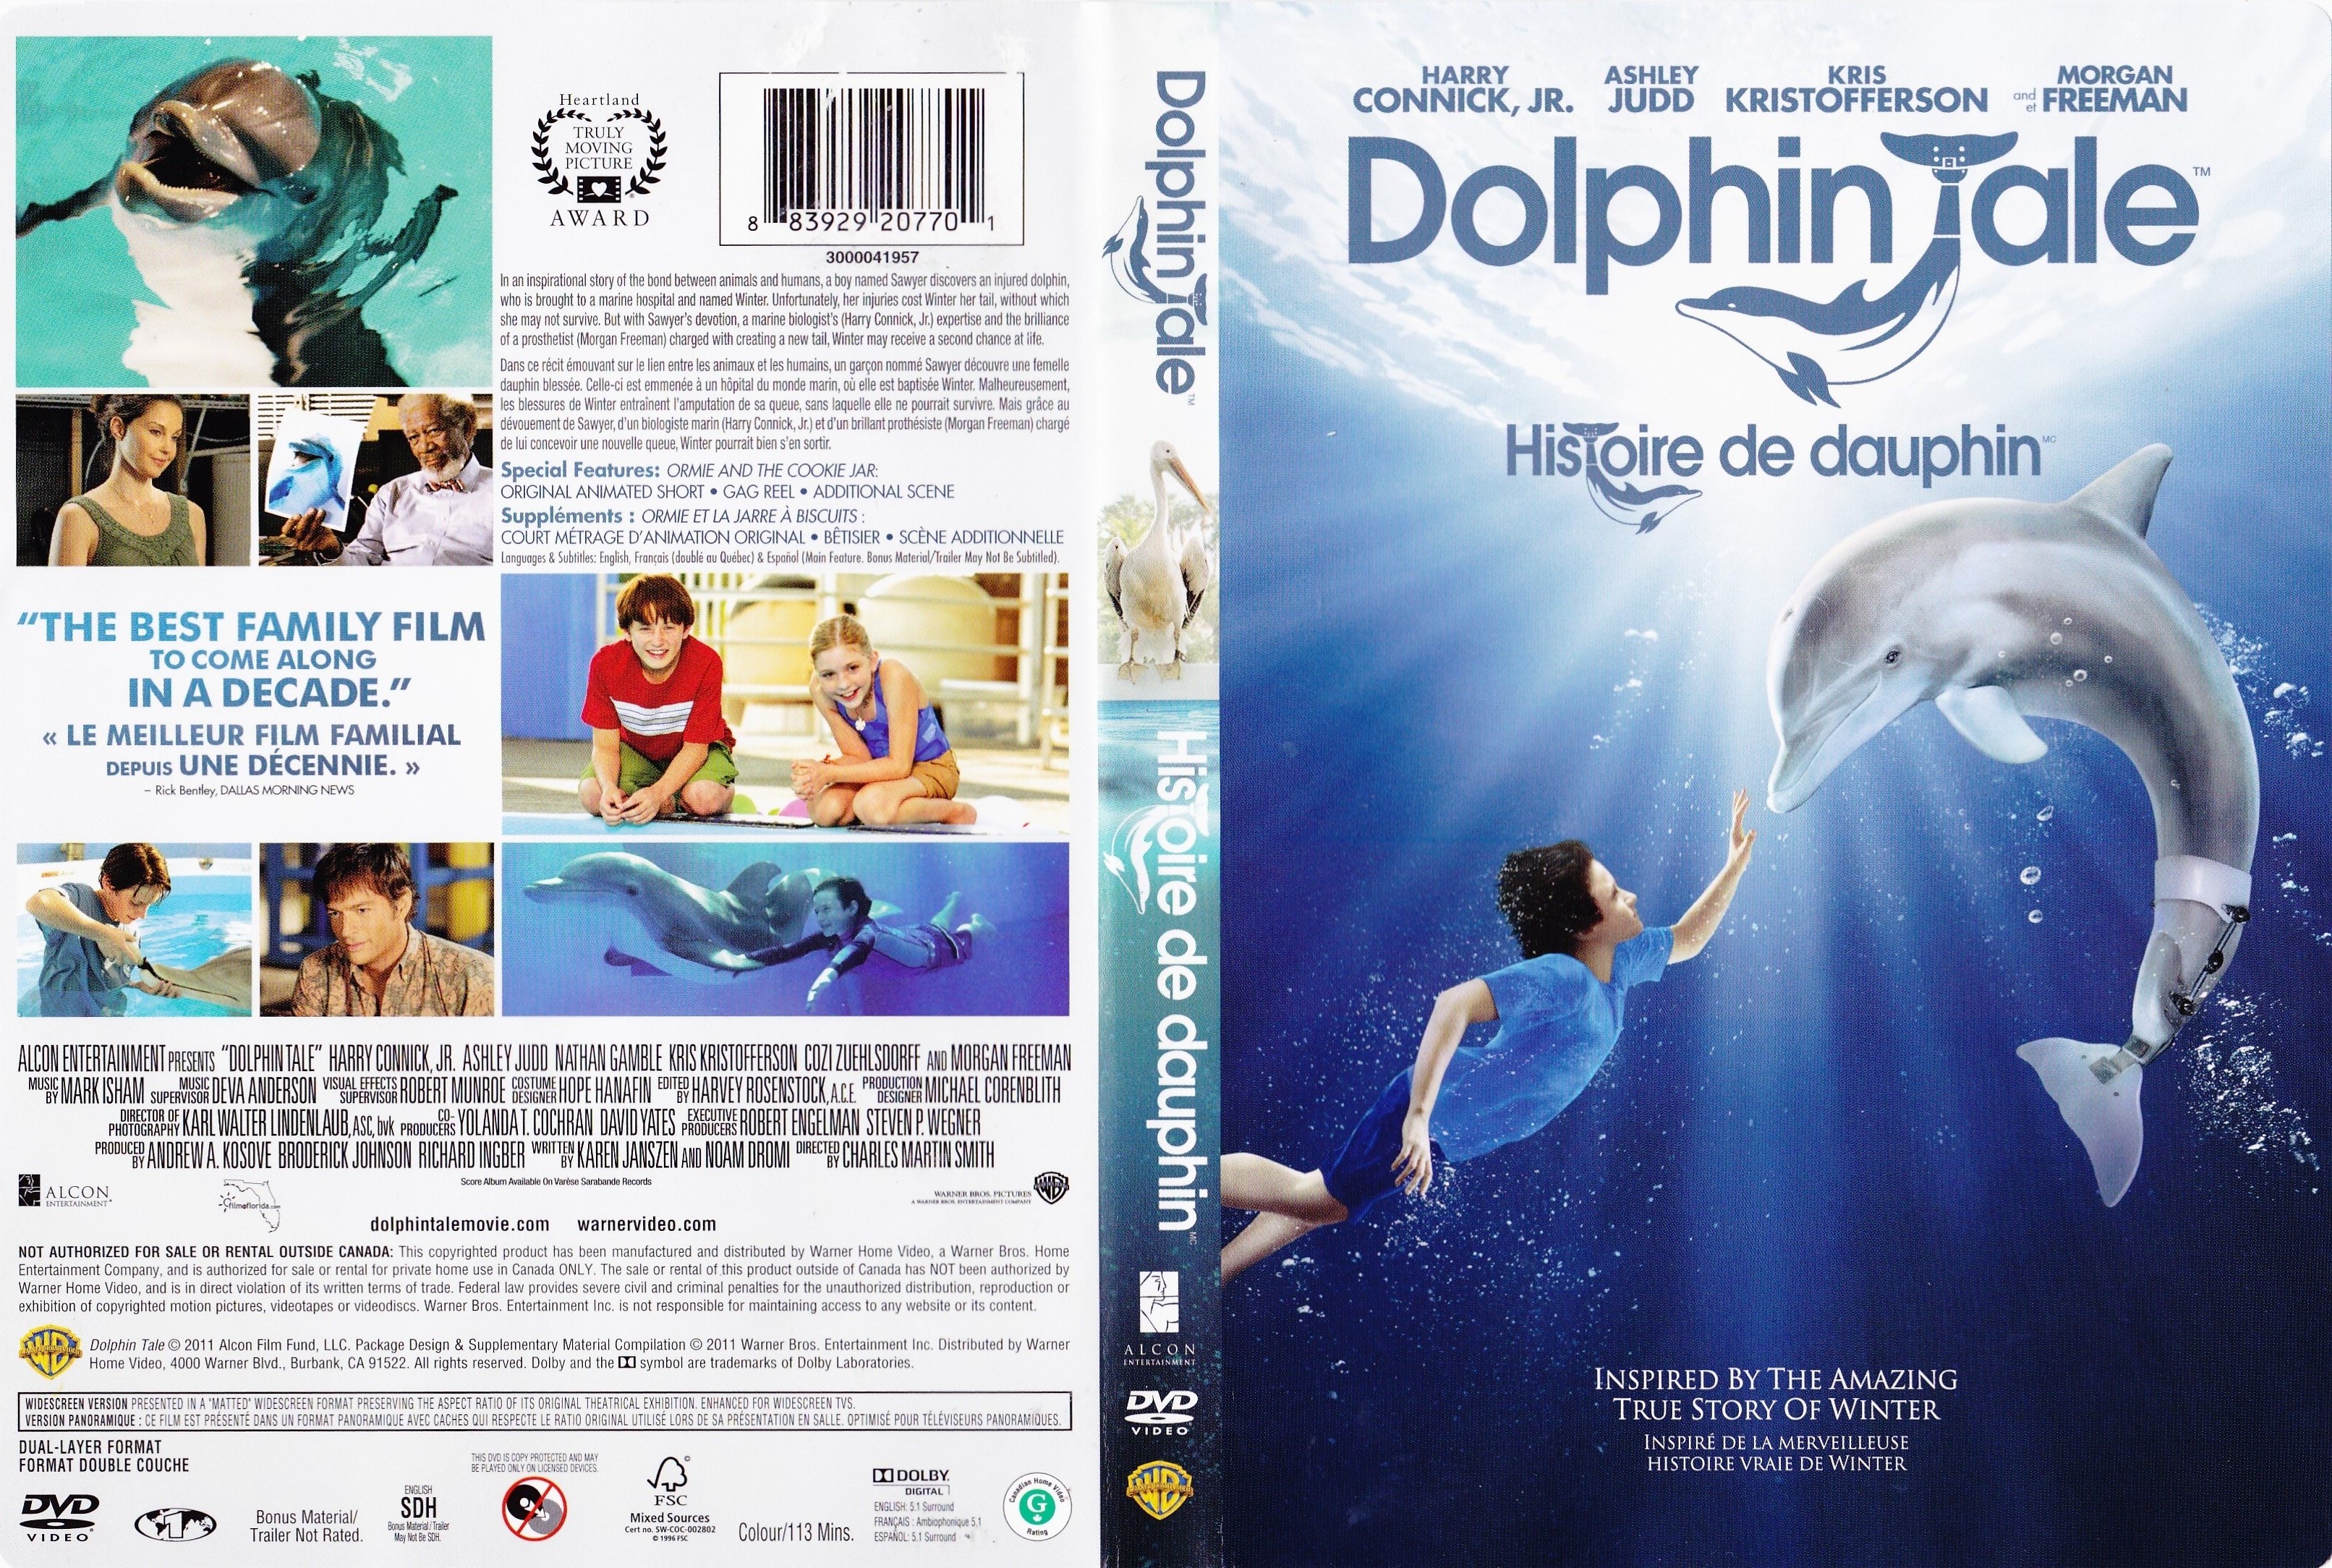 Jaquette DVD Dolphin tale - Histoire de dauphin (Canadienne)